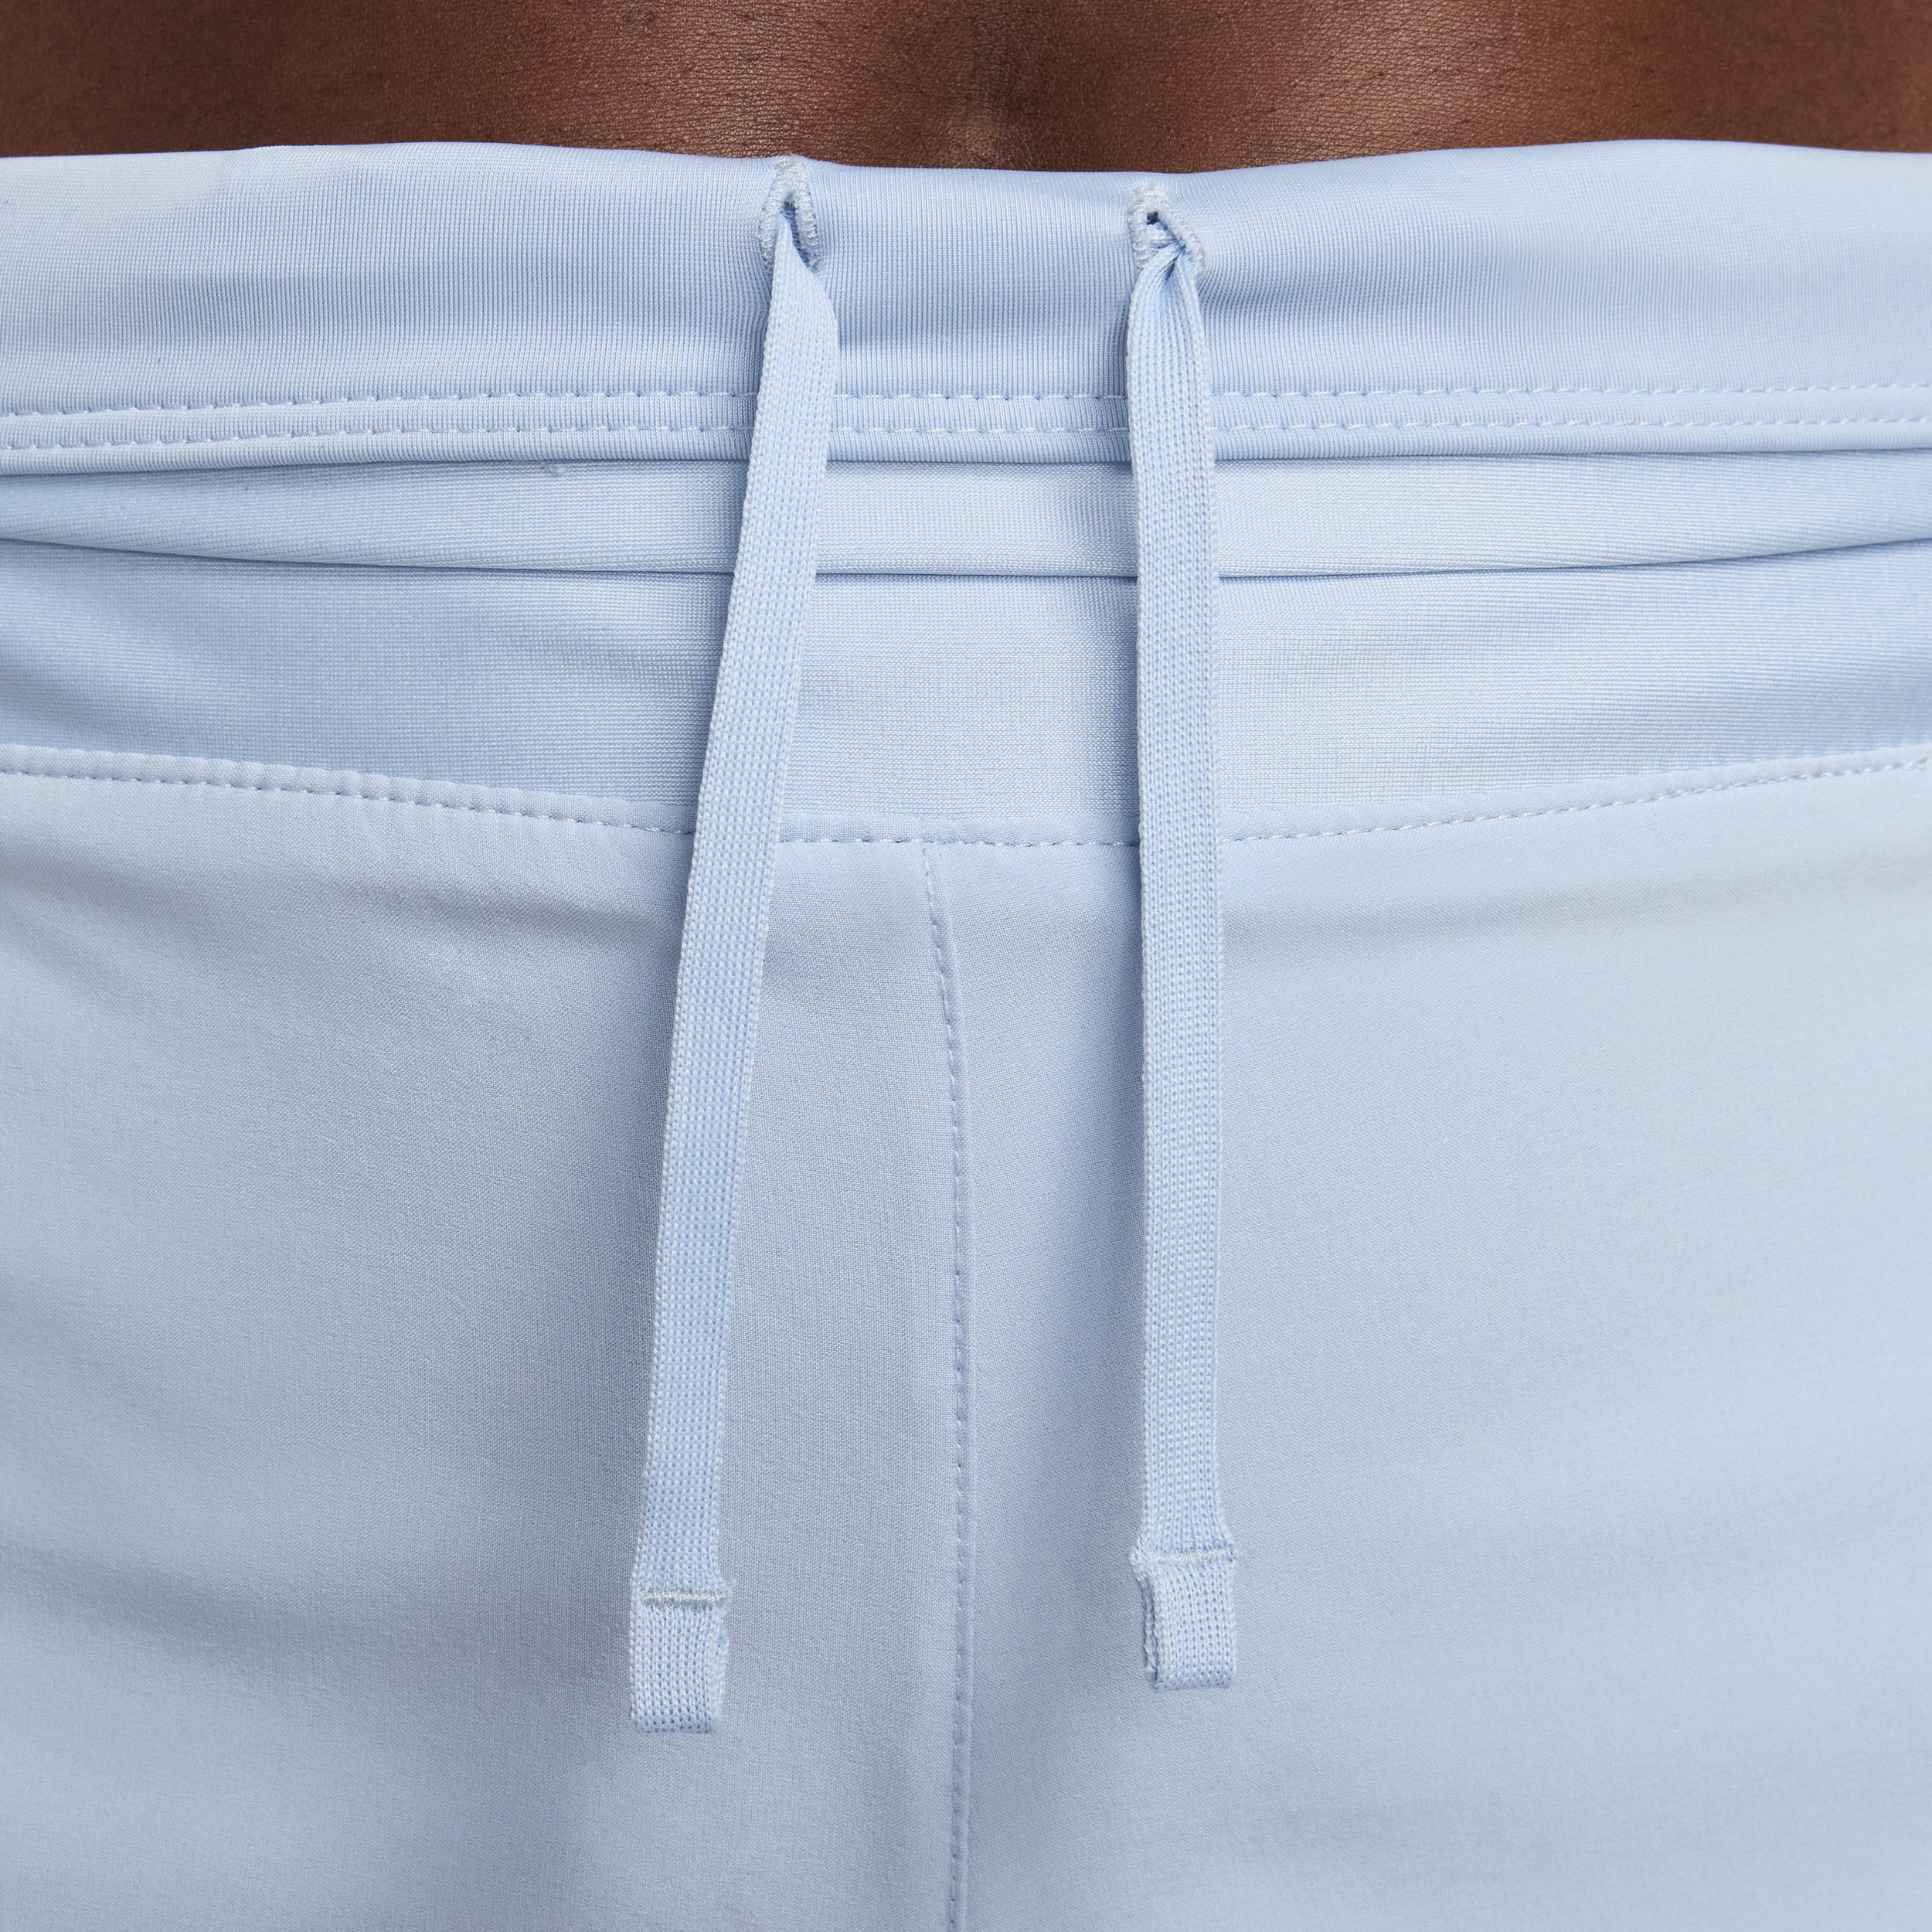 Nike Dri-FIT Swift 2-in-1 hardloopshorts met halfhoge taille en zakken voor dames (8 cm) Blauw